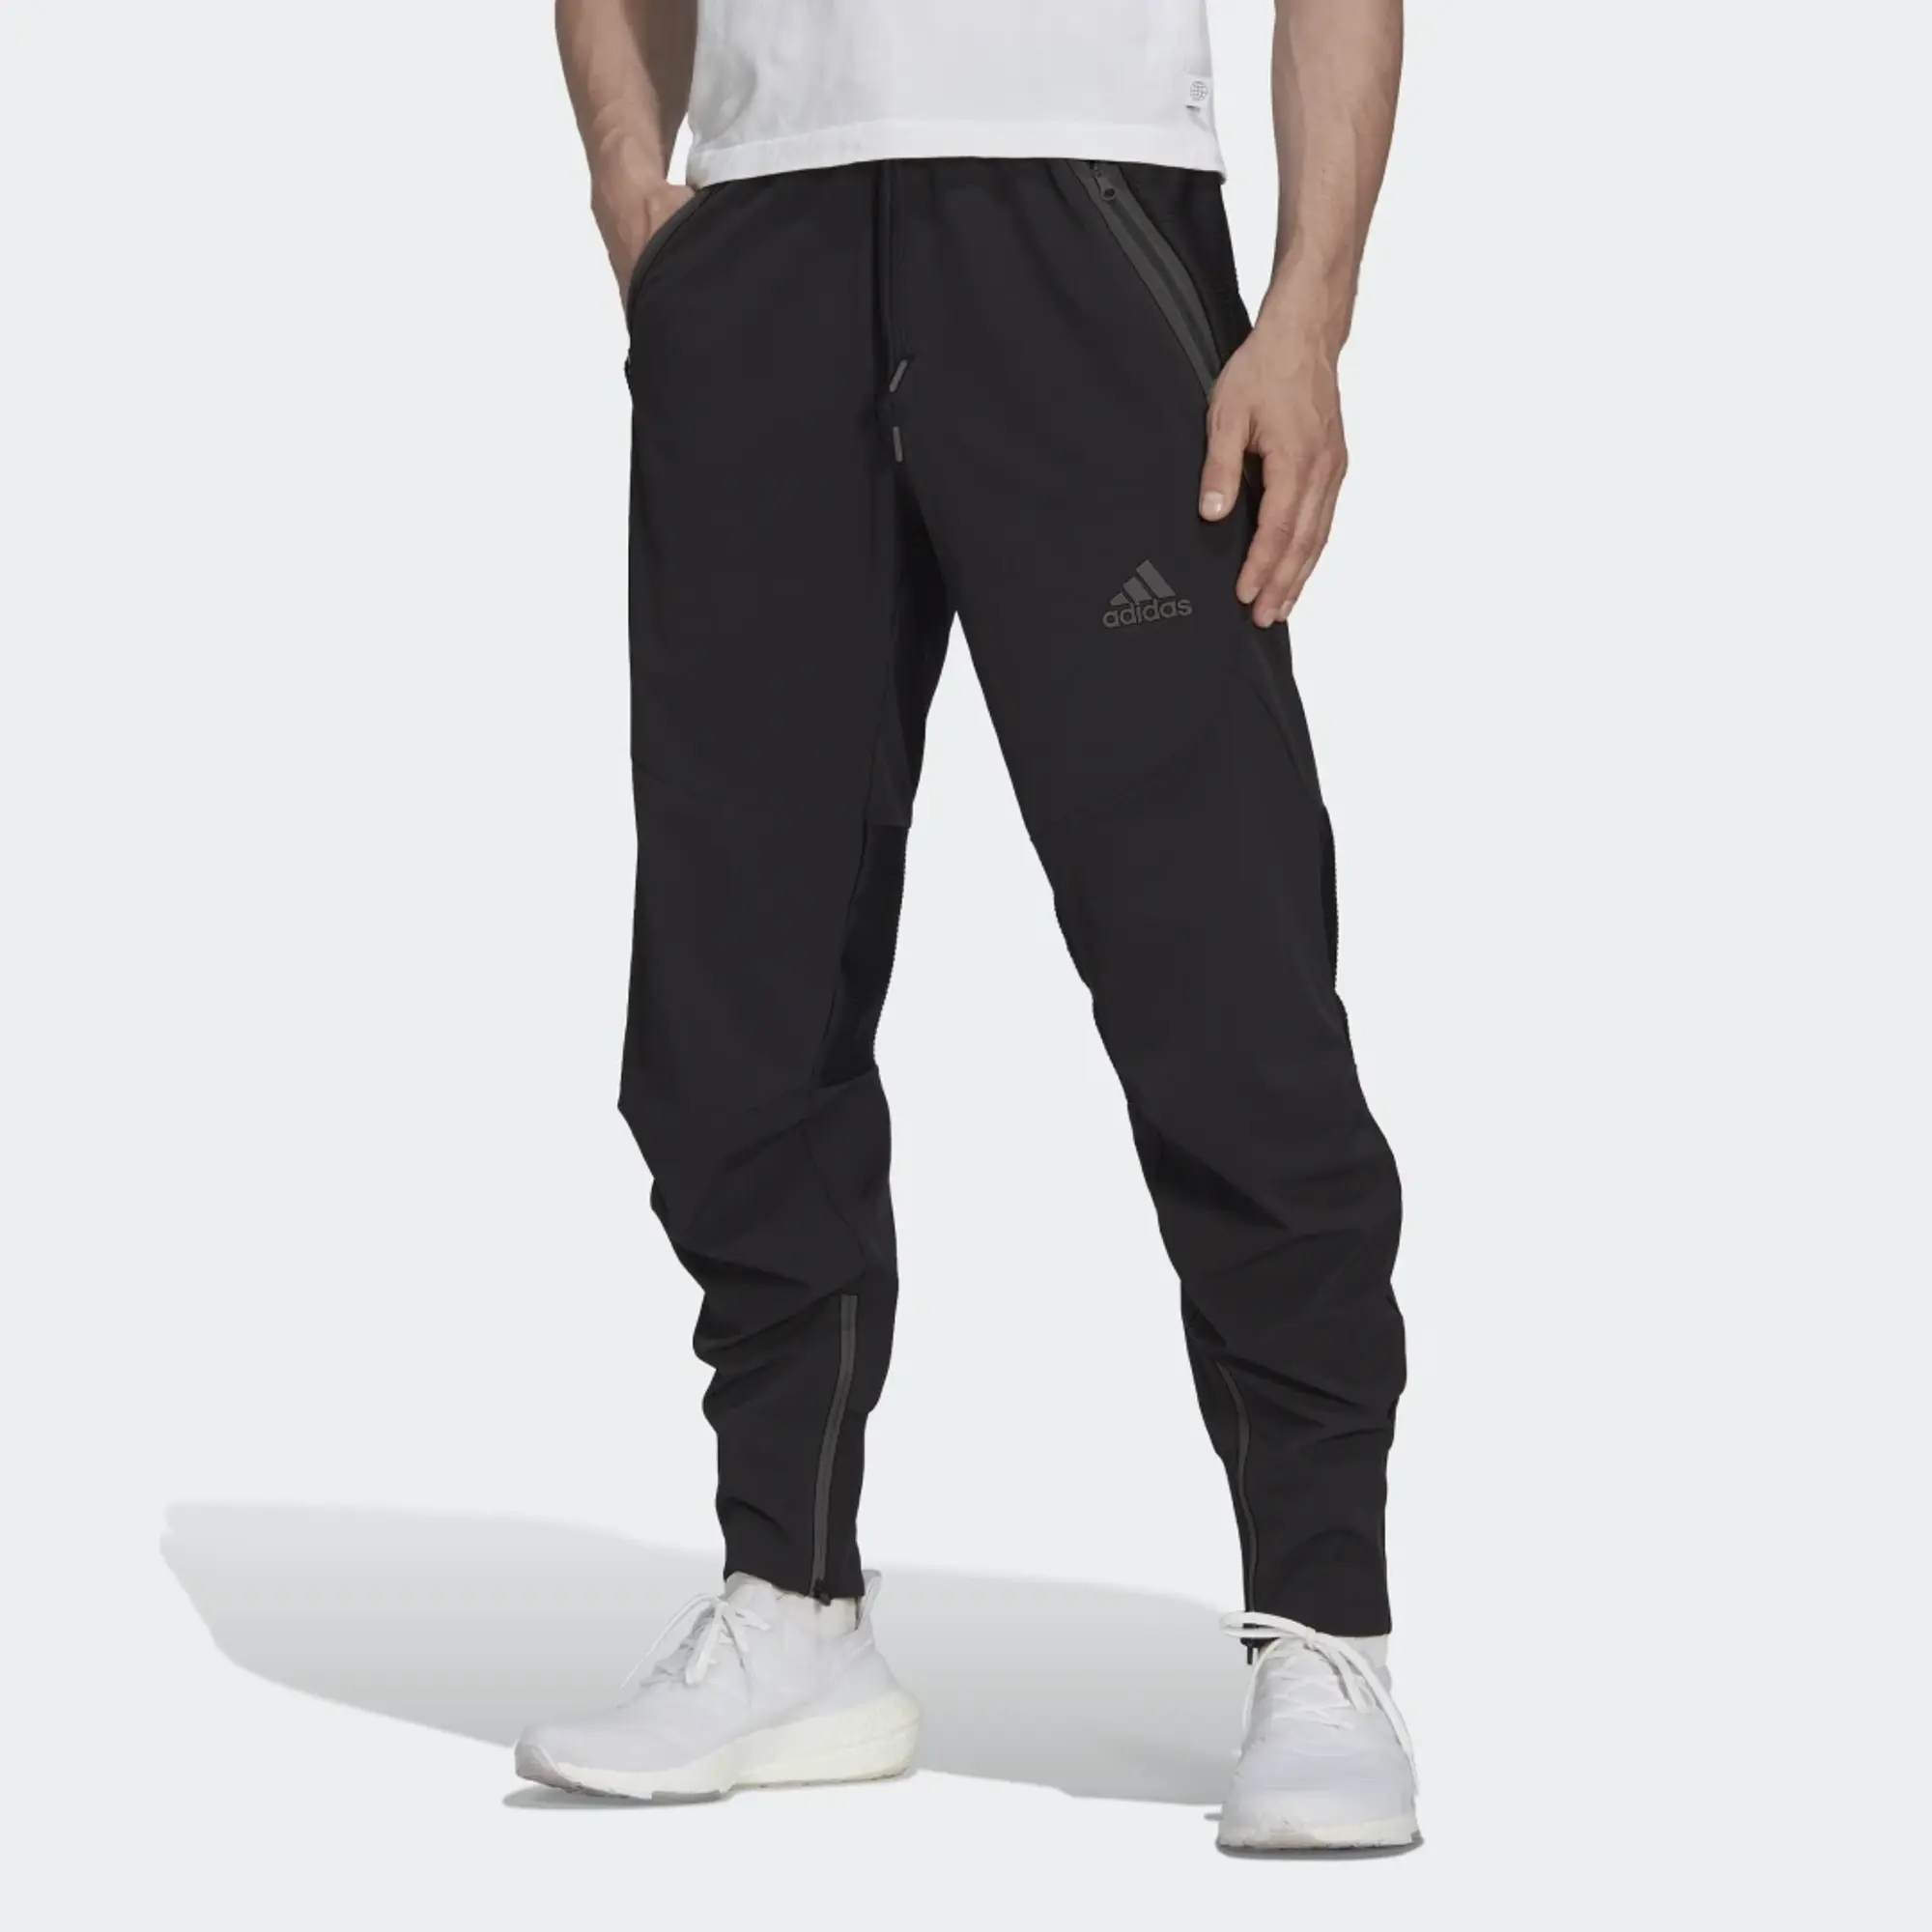 Adidas Pants Designed For Gameday - Black